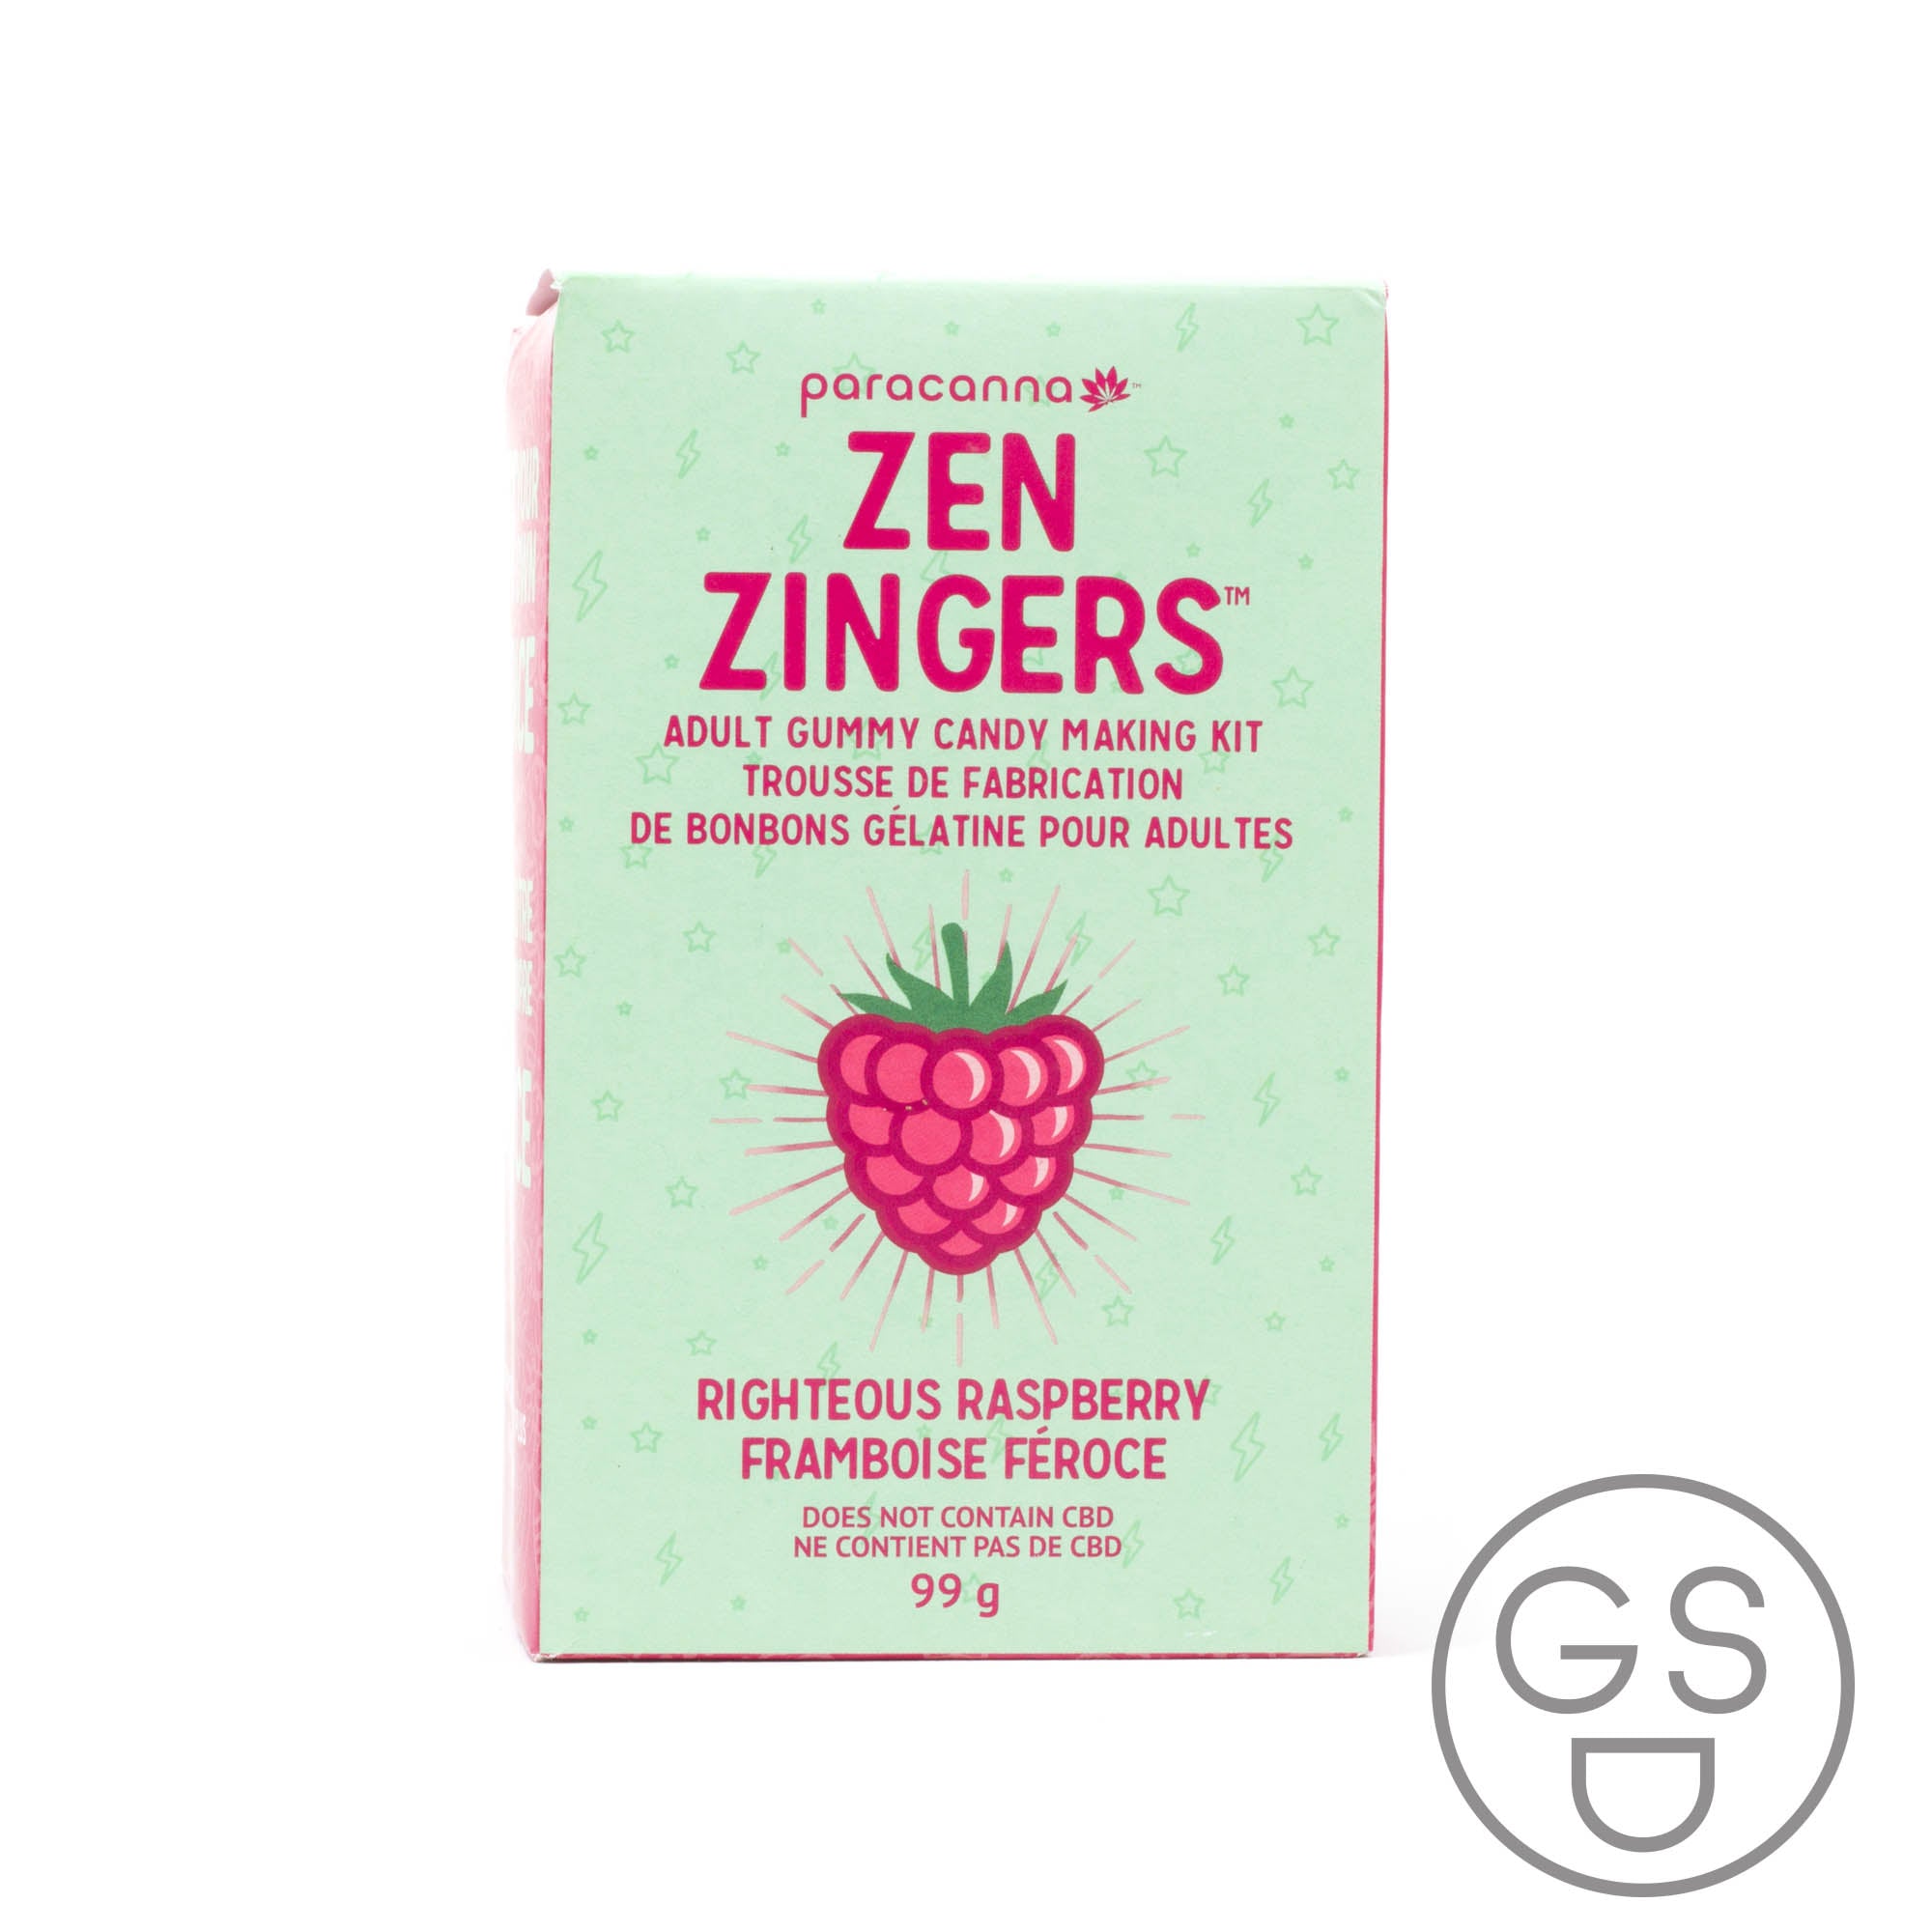 Paracanna Zen Zinger Gummy Making Kits